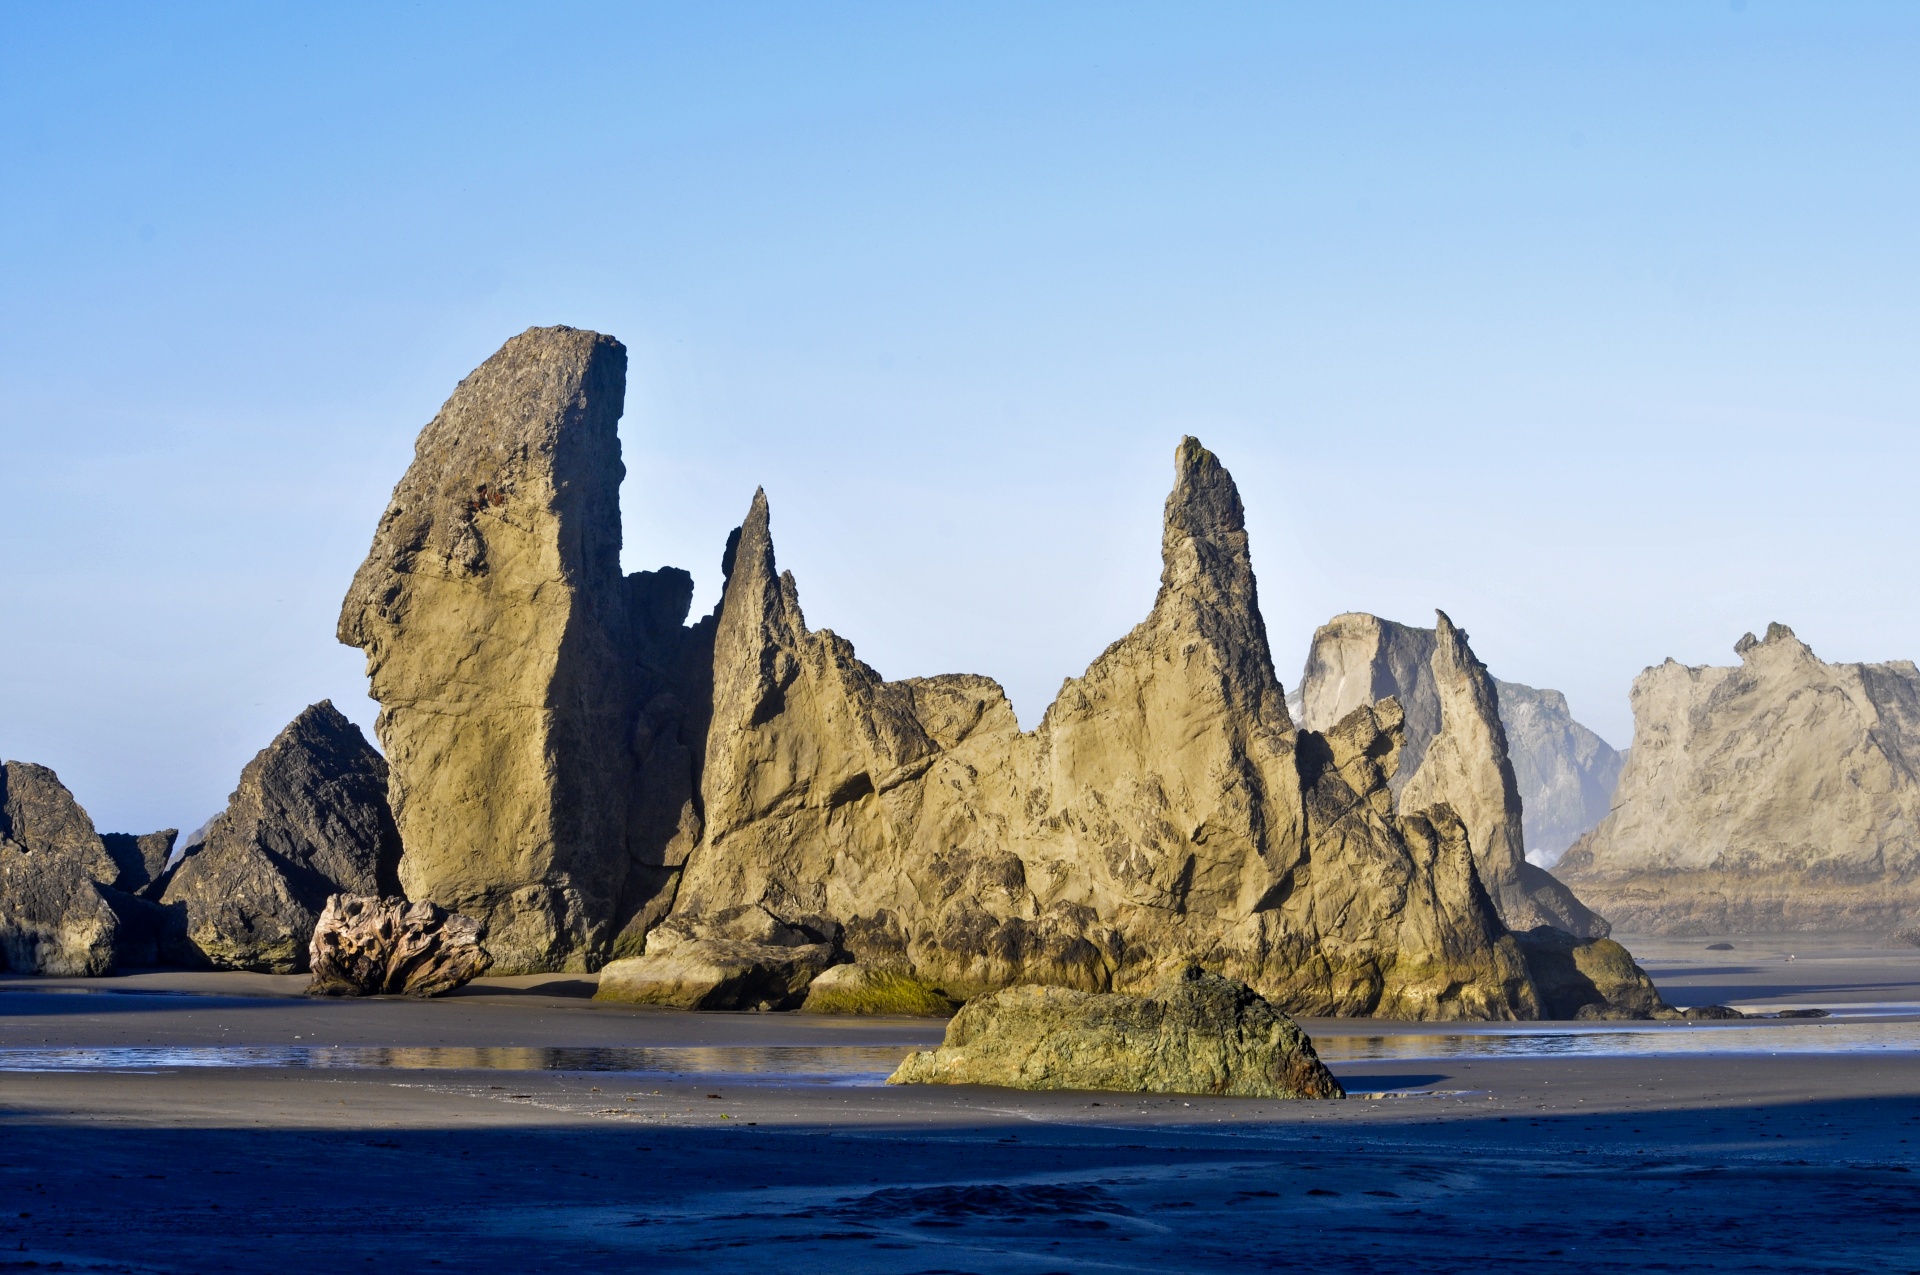 assortment of massive rocks along the shore in Brandon, Oregon